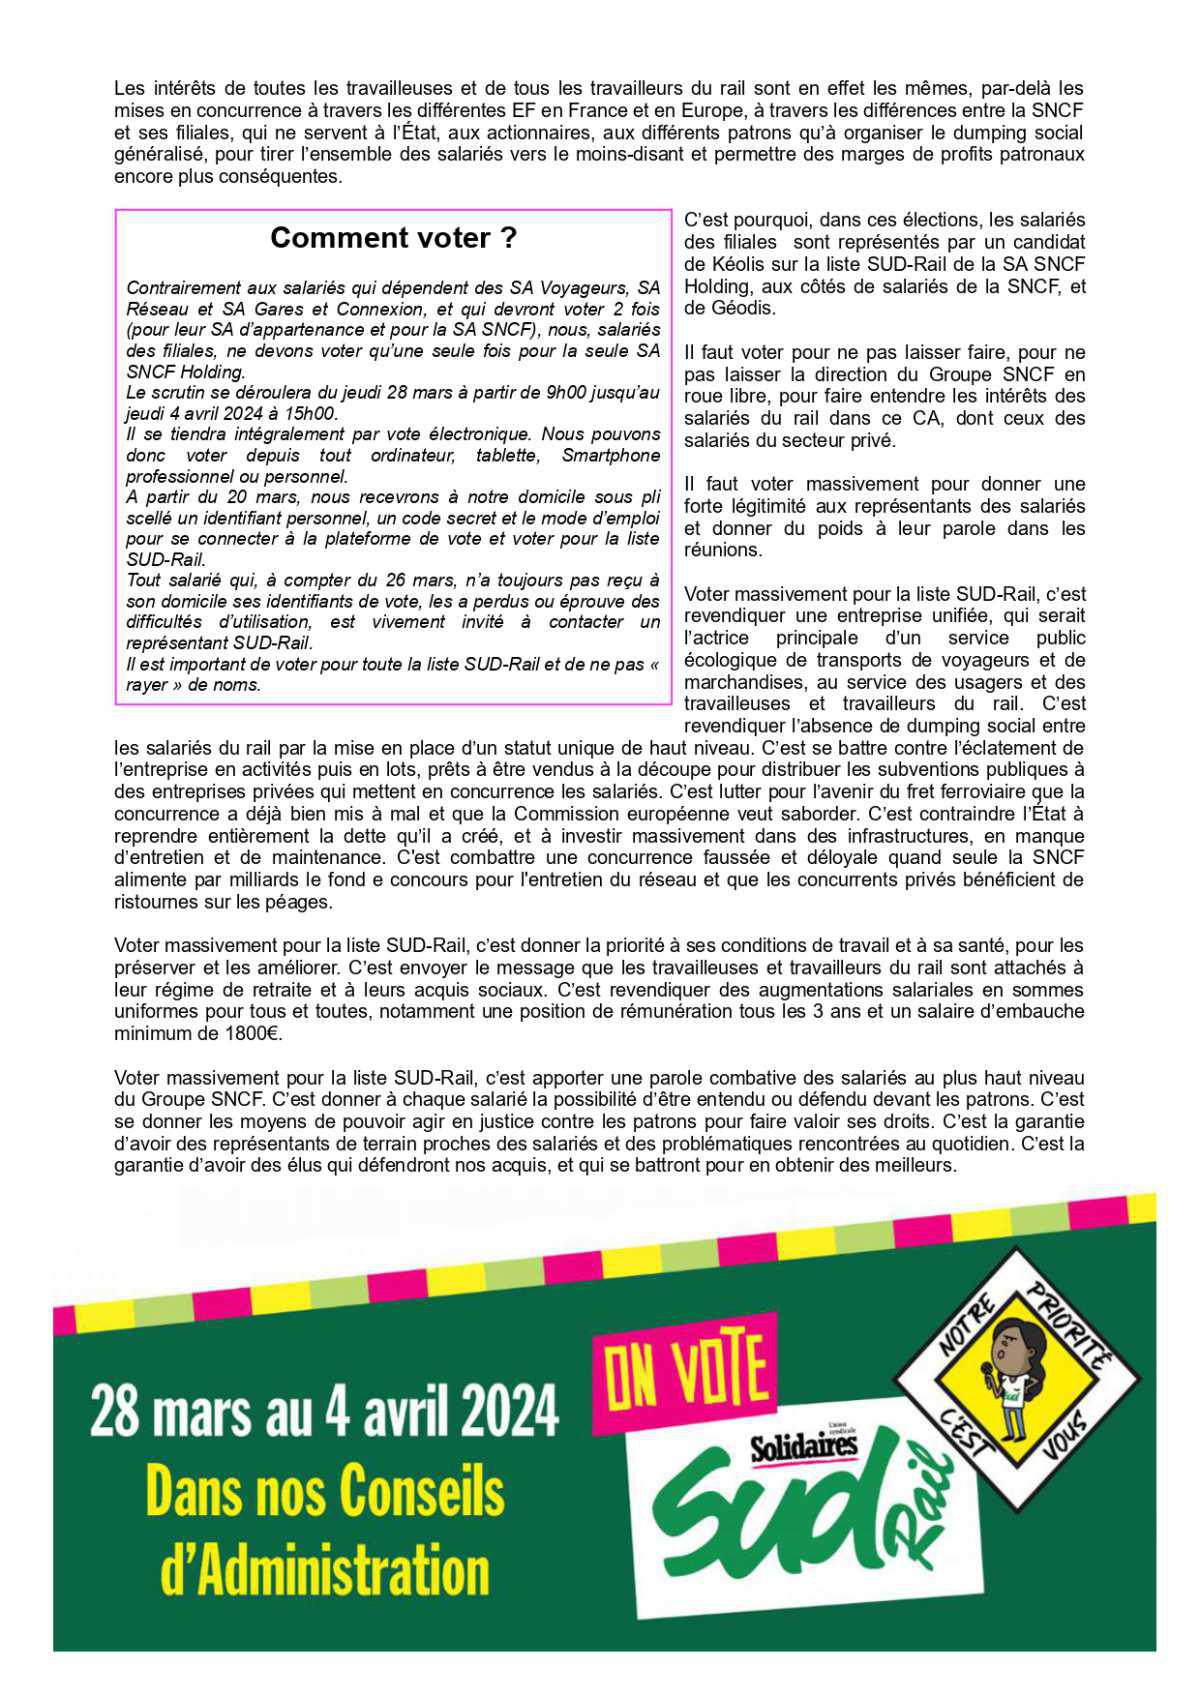 Tract élections CA SNCF Holding GEODIS, KEOLIS, CAPTRAIN...